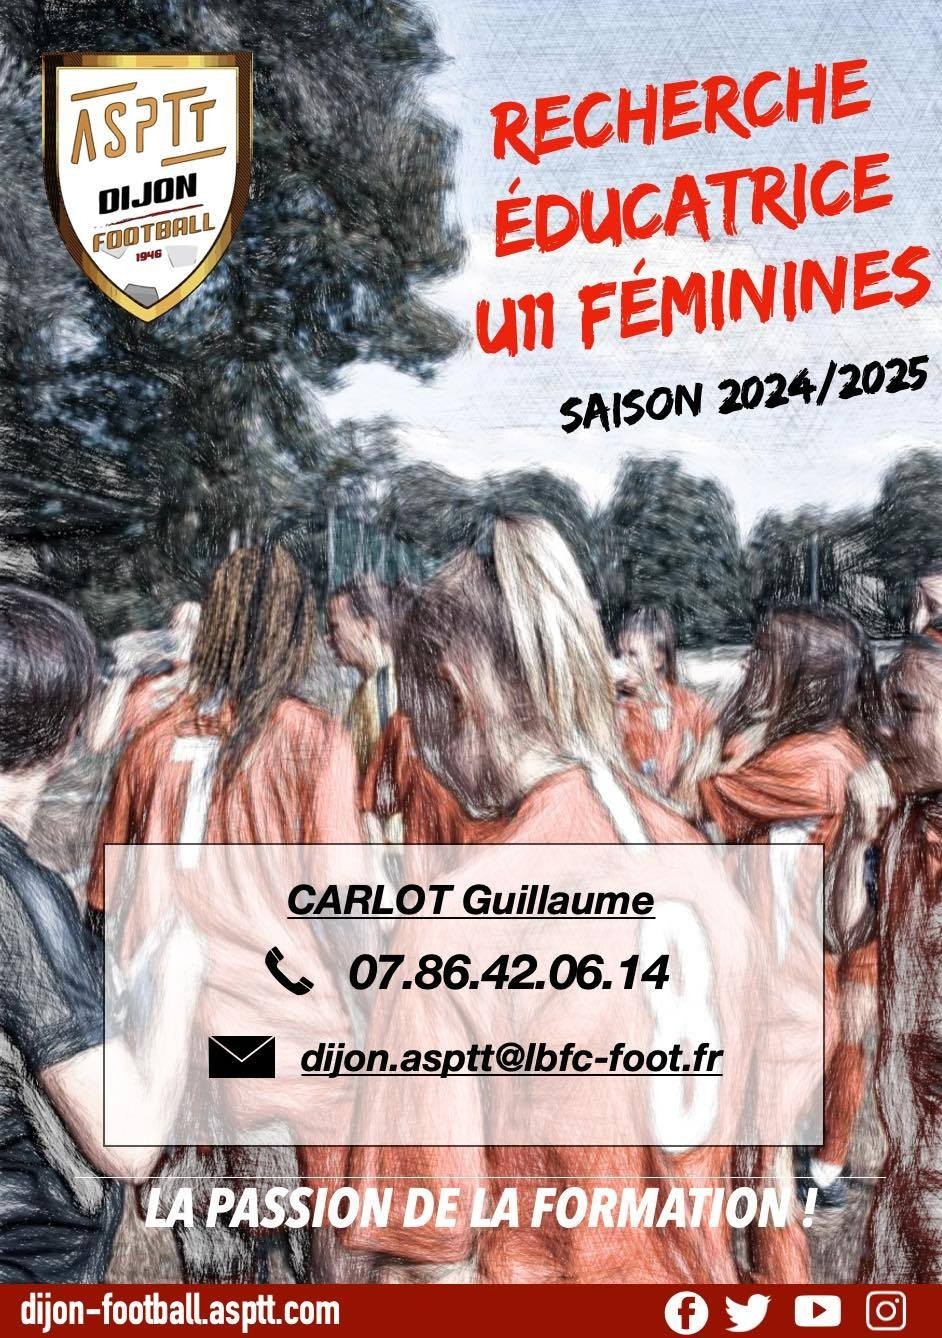 L'ASPTT Dijon football recherche une éducatrice féminine